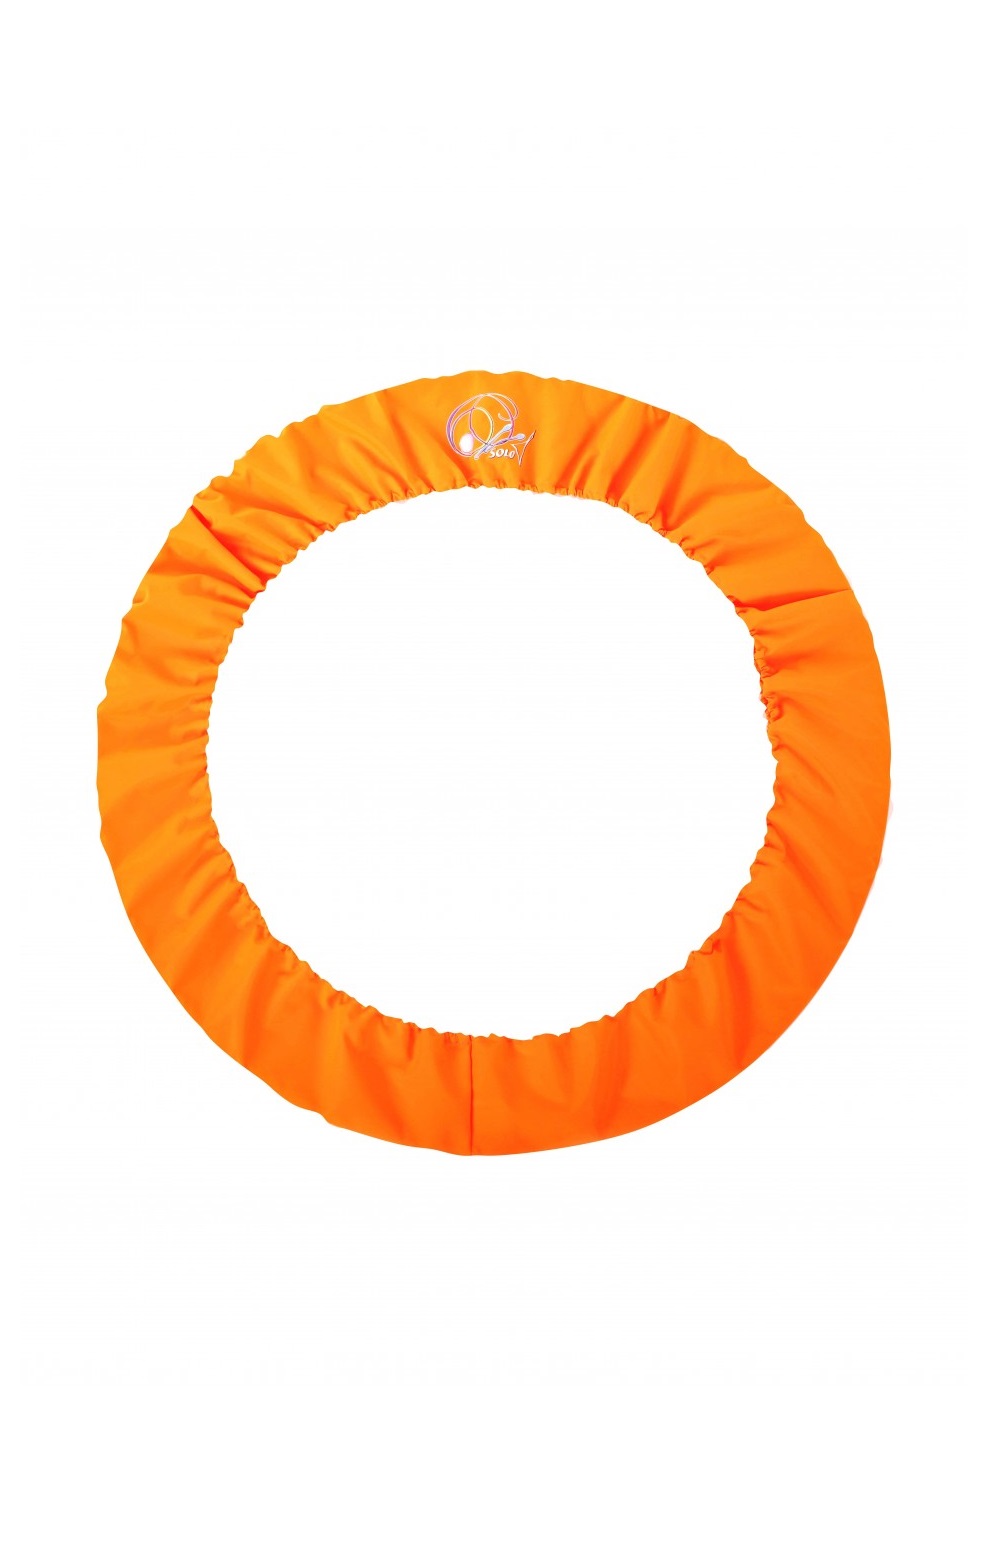 Holder for gymnastics hoop SOLO CH300 neon orange, size S